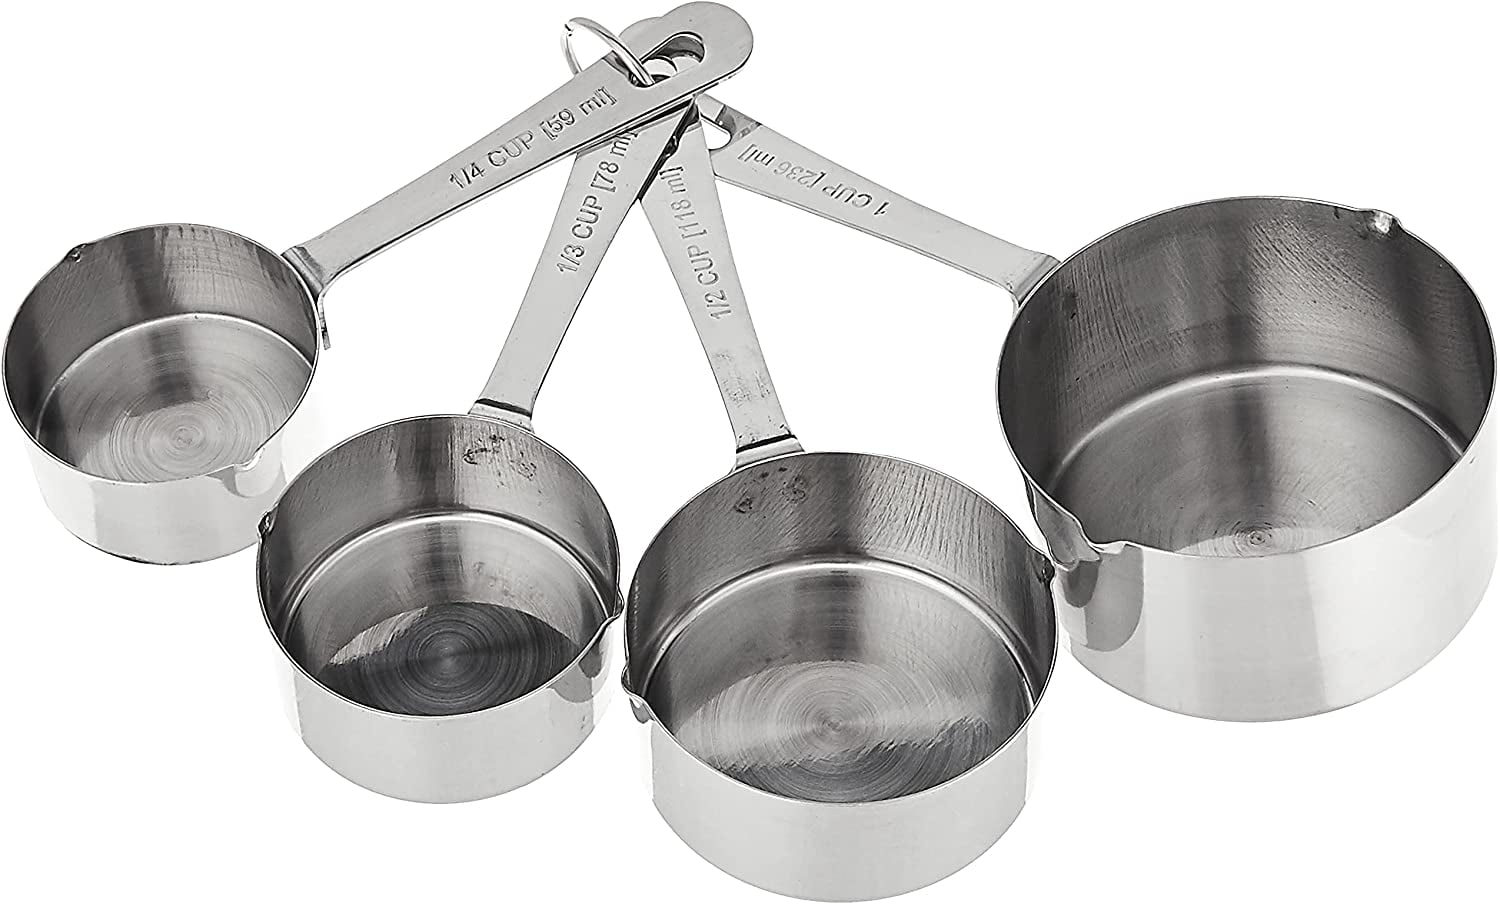 Artaste 4 Piece Stainless Steel Measuring Cup Set, Silver